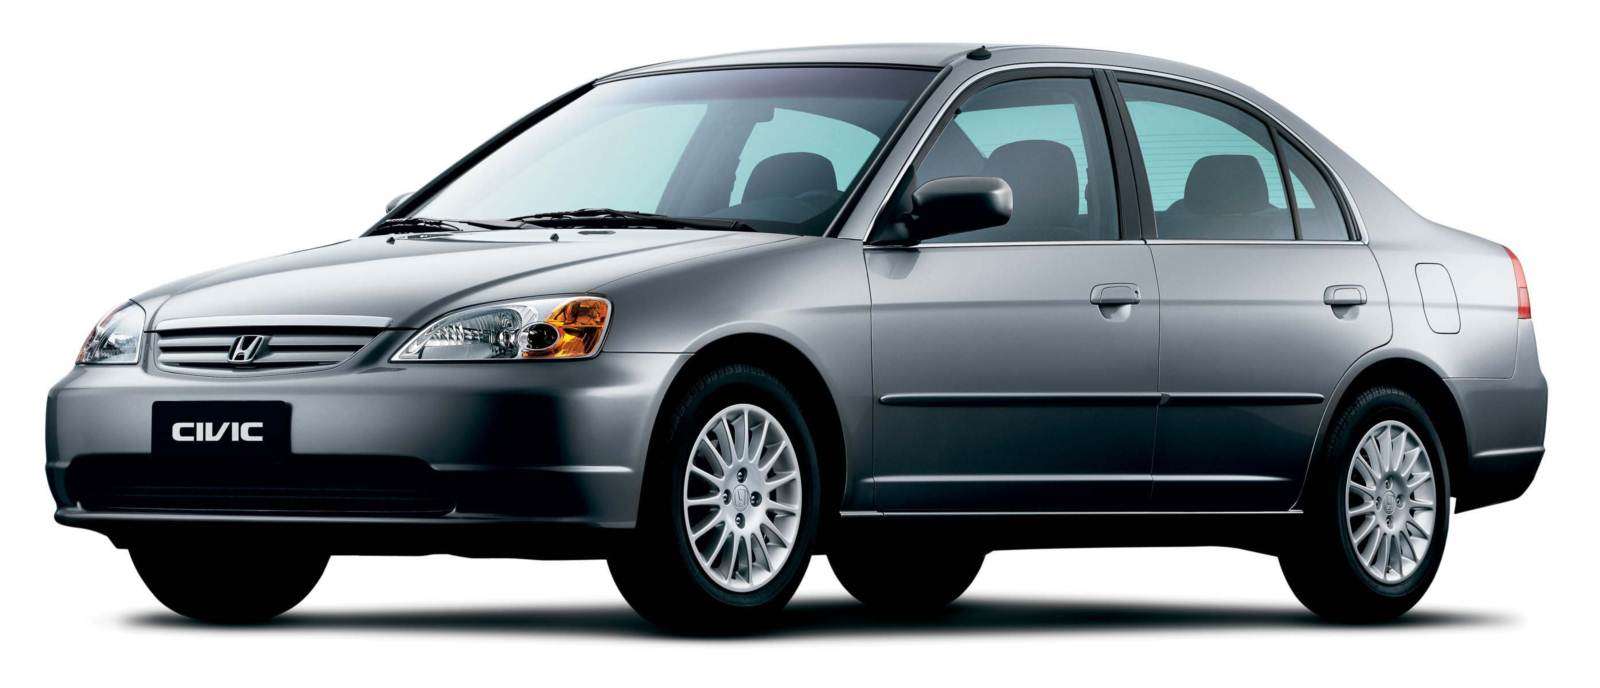 Honda civic airbags recall #5